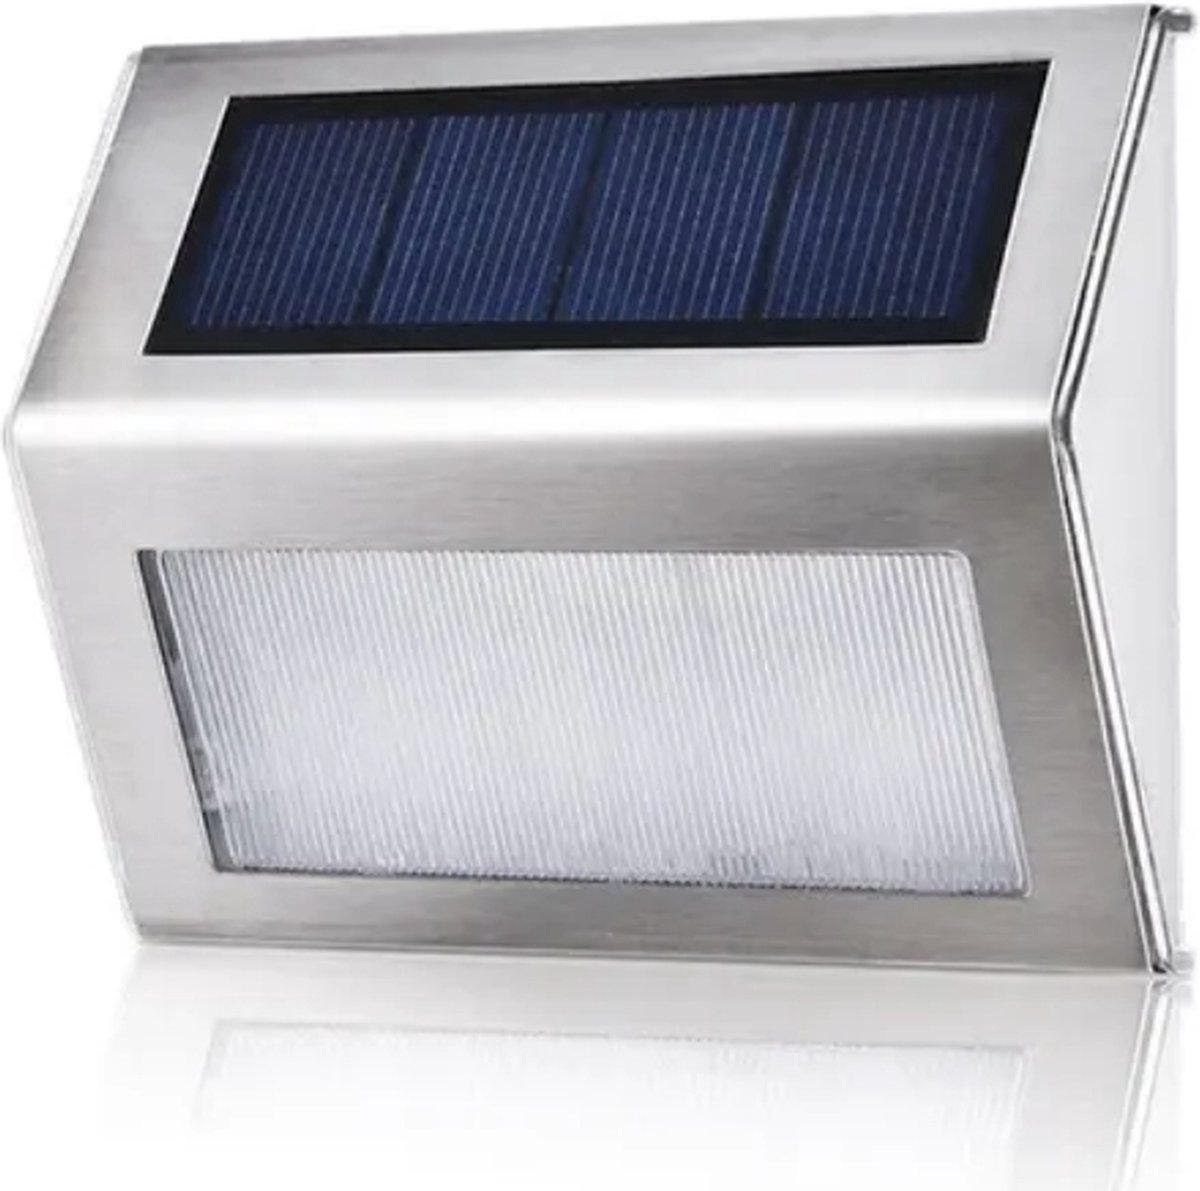 2 x Qlteg - Solar buiten led lamp - Power 3 leds outdoor - Waterdicht - Energiebesparende - Trappen - Wand led lamp - Zonne energie. - Qlteg